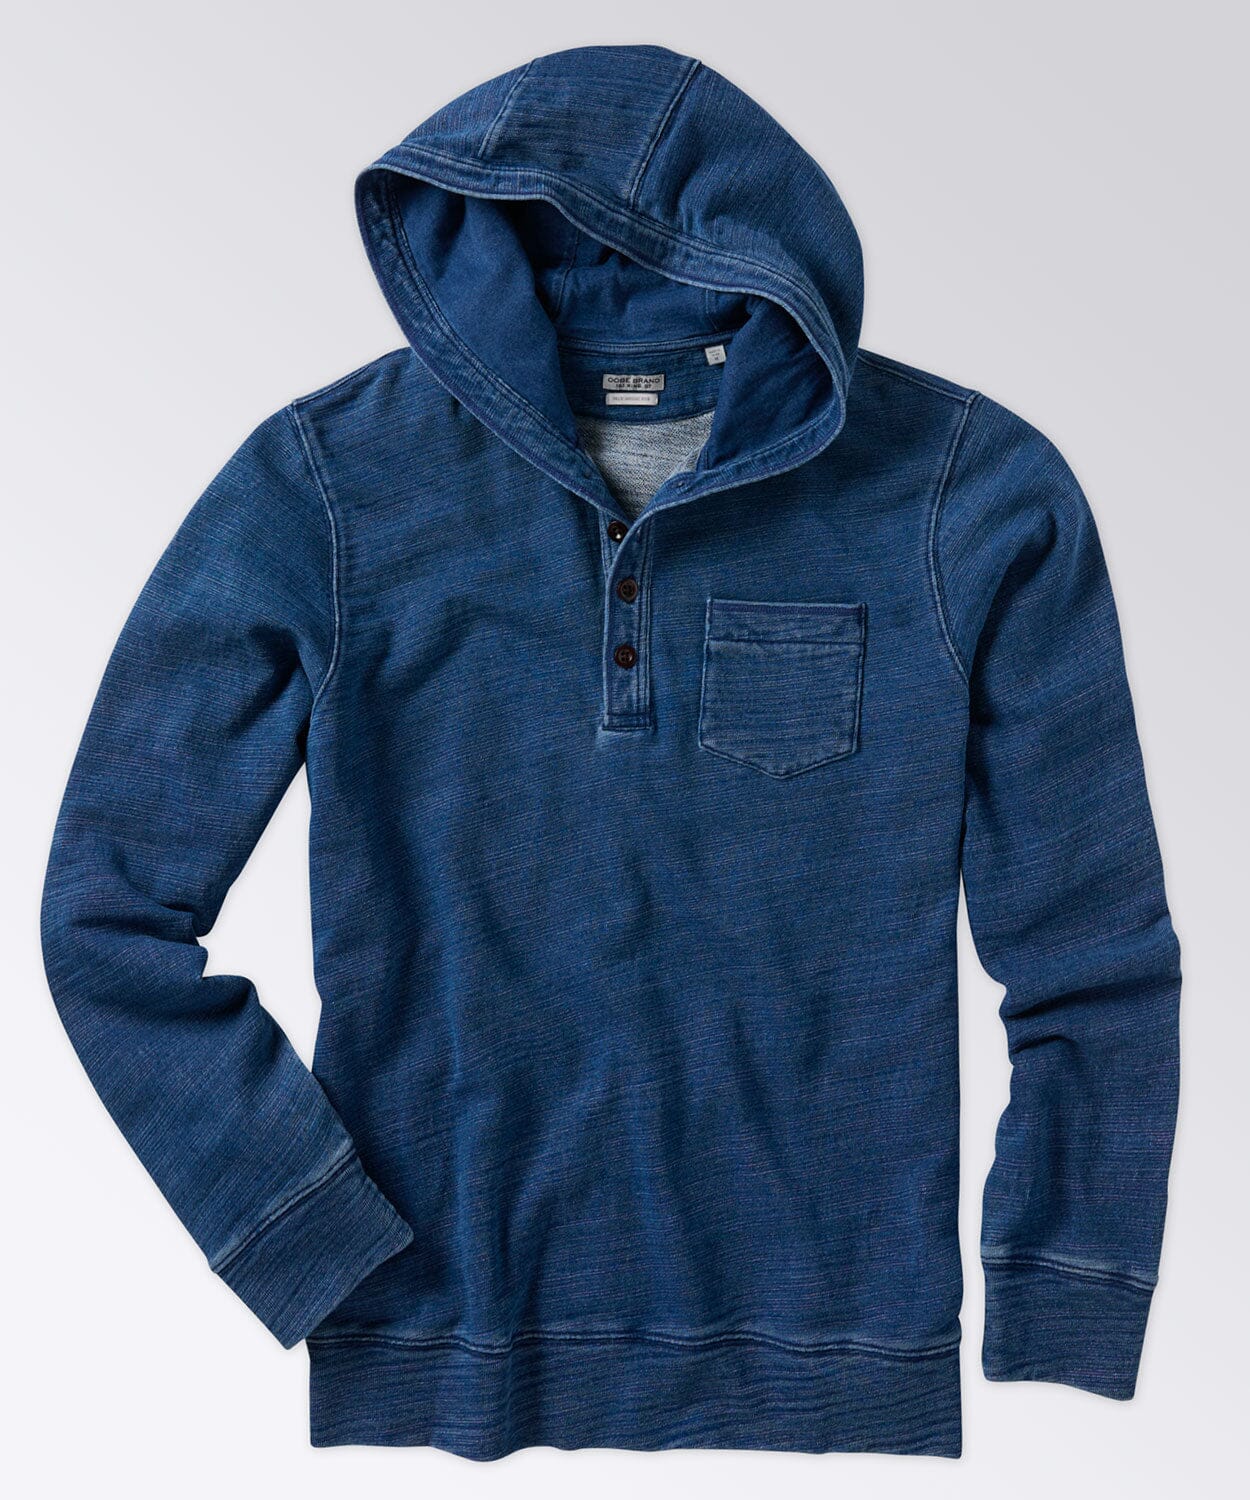 BRAND OOBE Collection Menswear by Premium | Indigo Blue